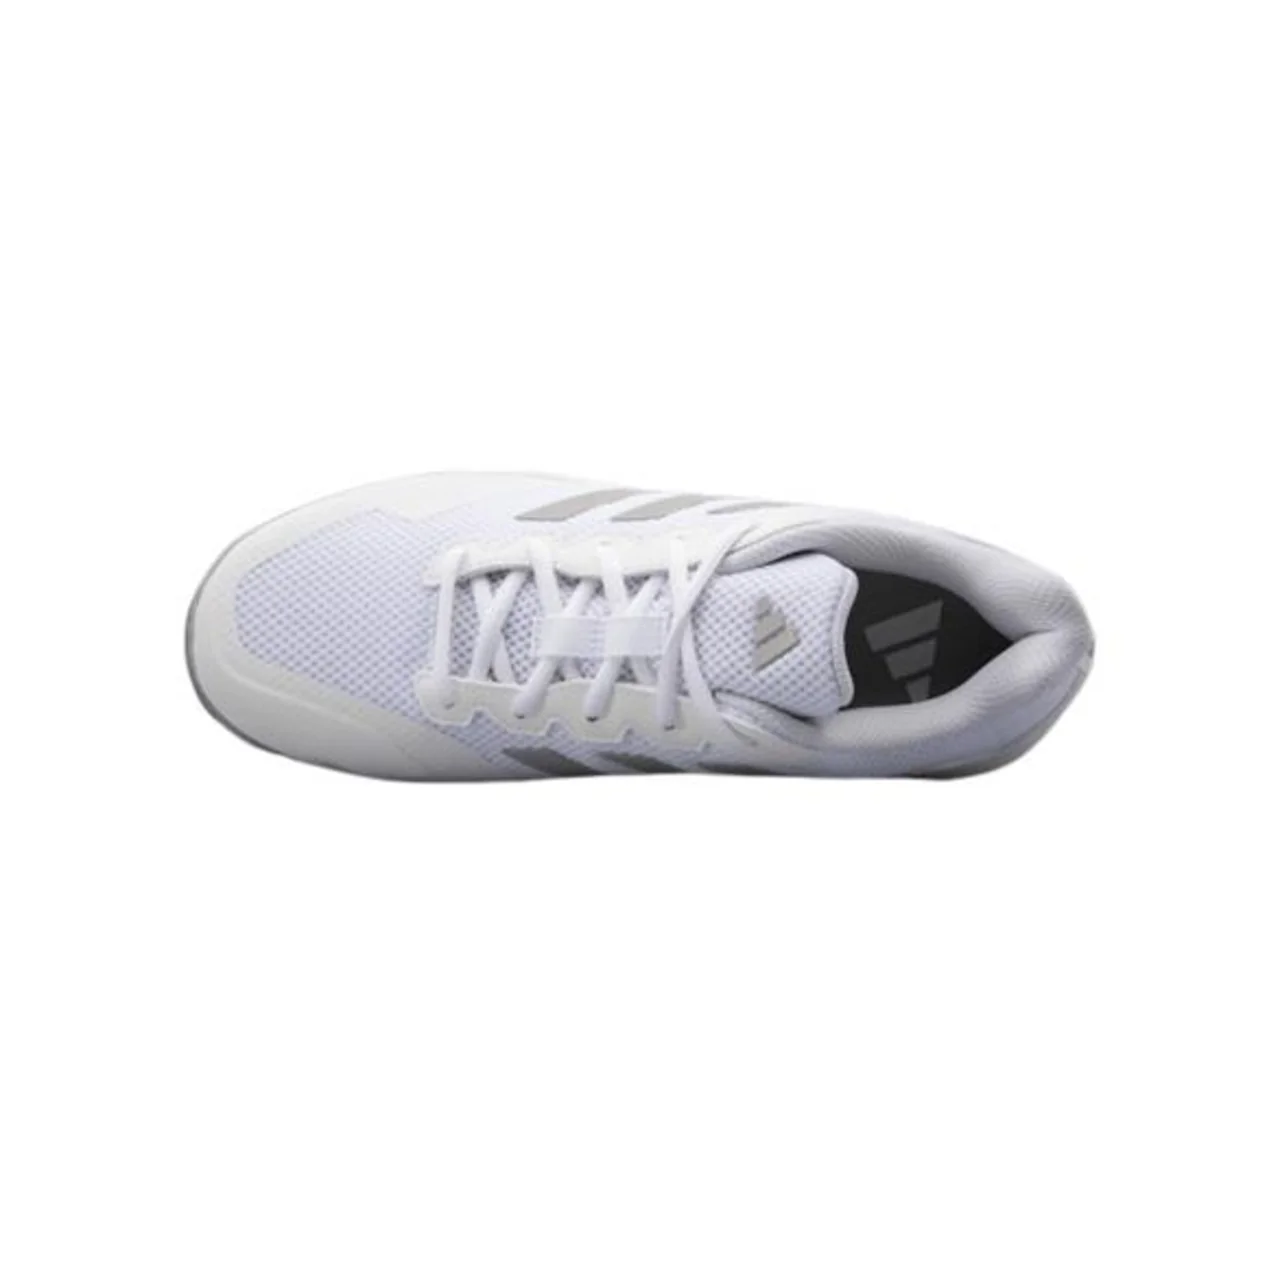 Adidas Gamecourt 2 White